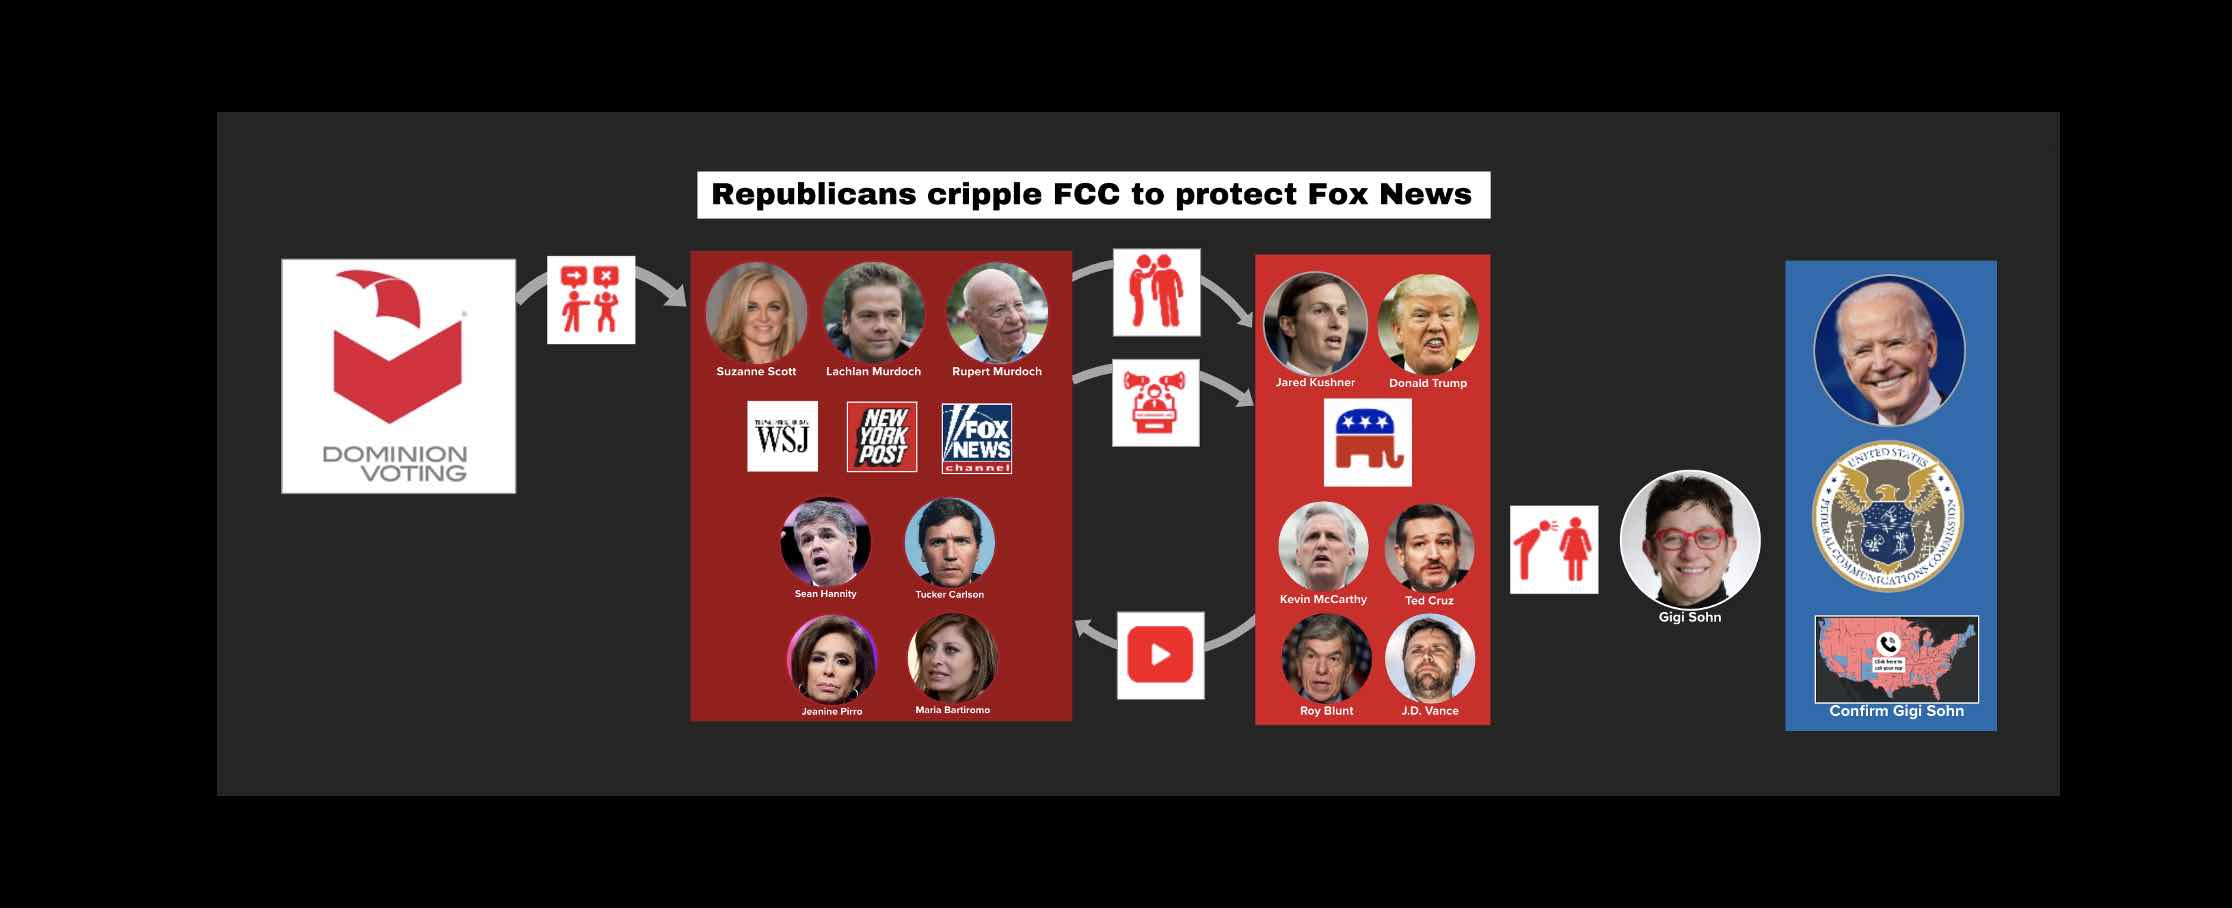 Republicans cripple FCC to protect Fox News